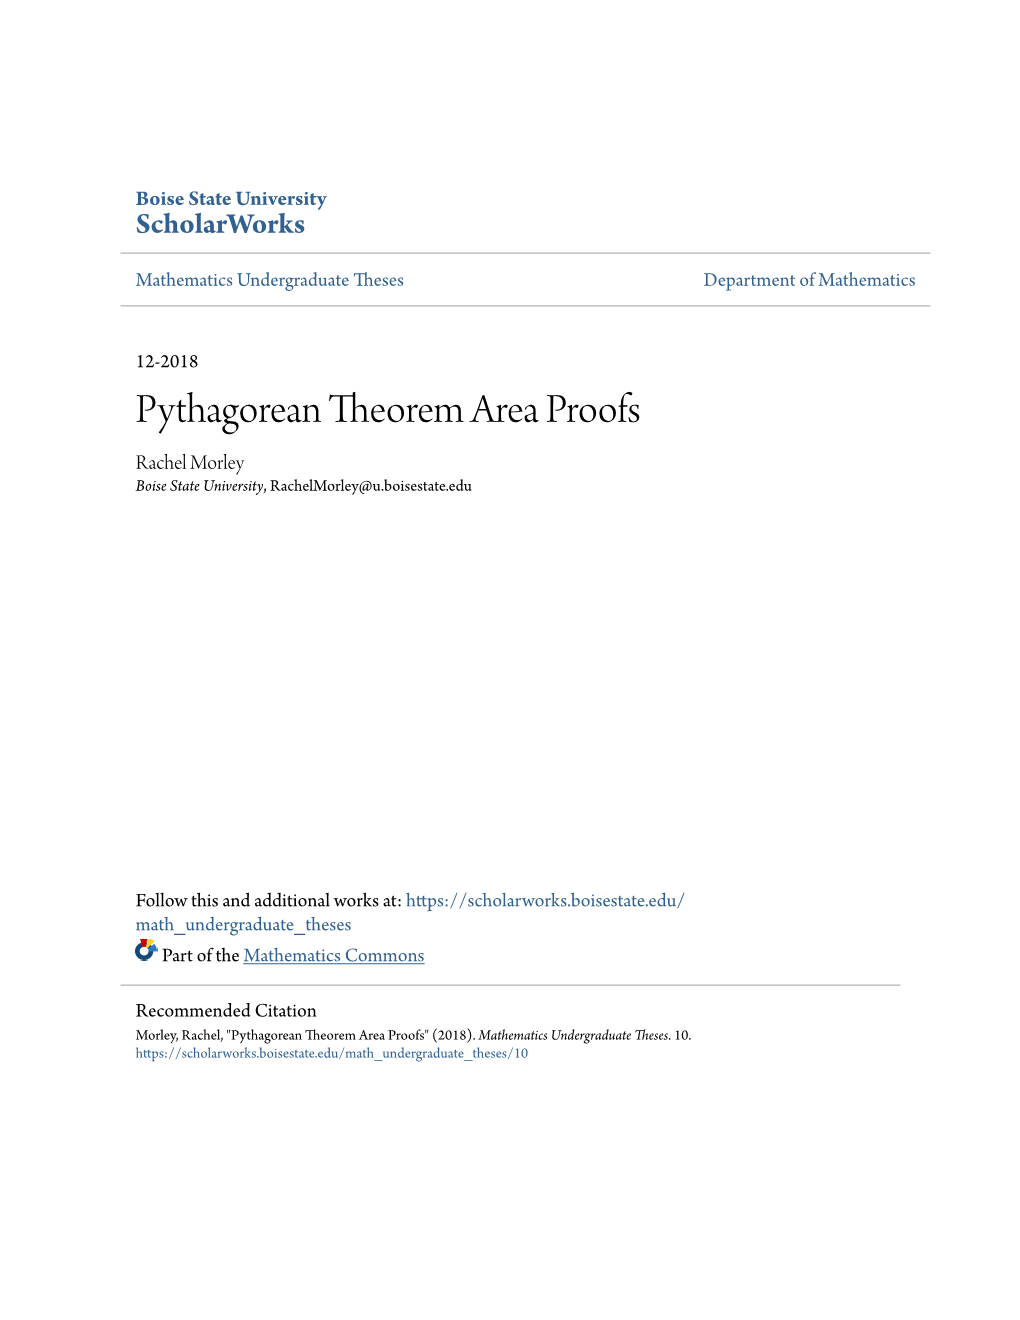 Pythagorean Theorem Area Proofs Rachel Morley Boise State University, Rachelmorley@U.Boisestate.Edu